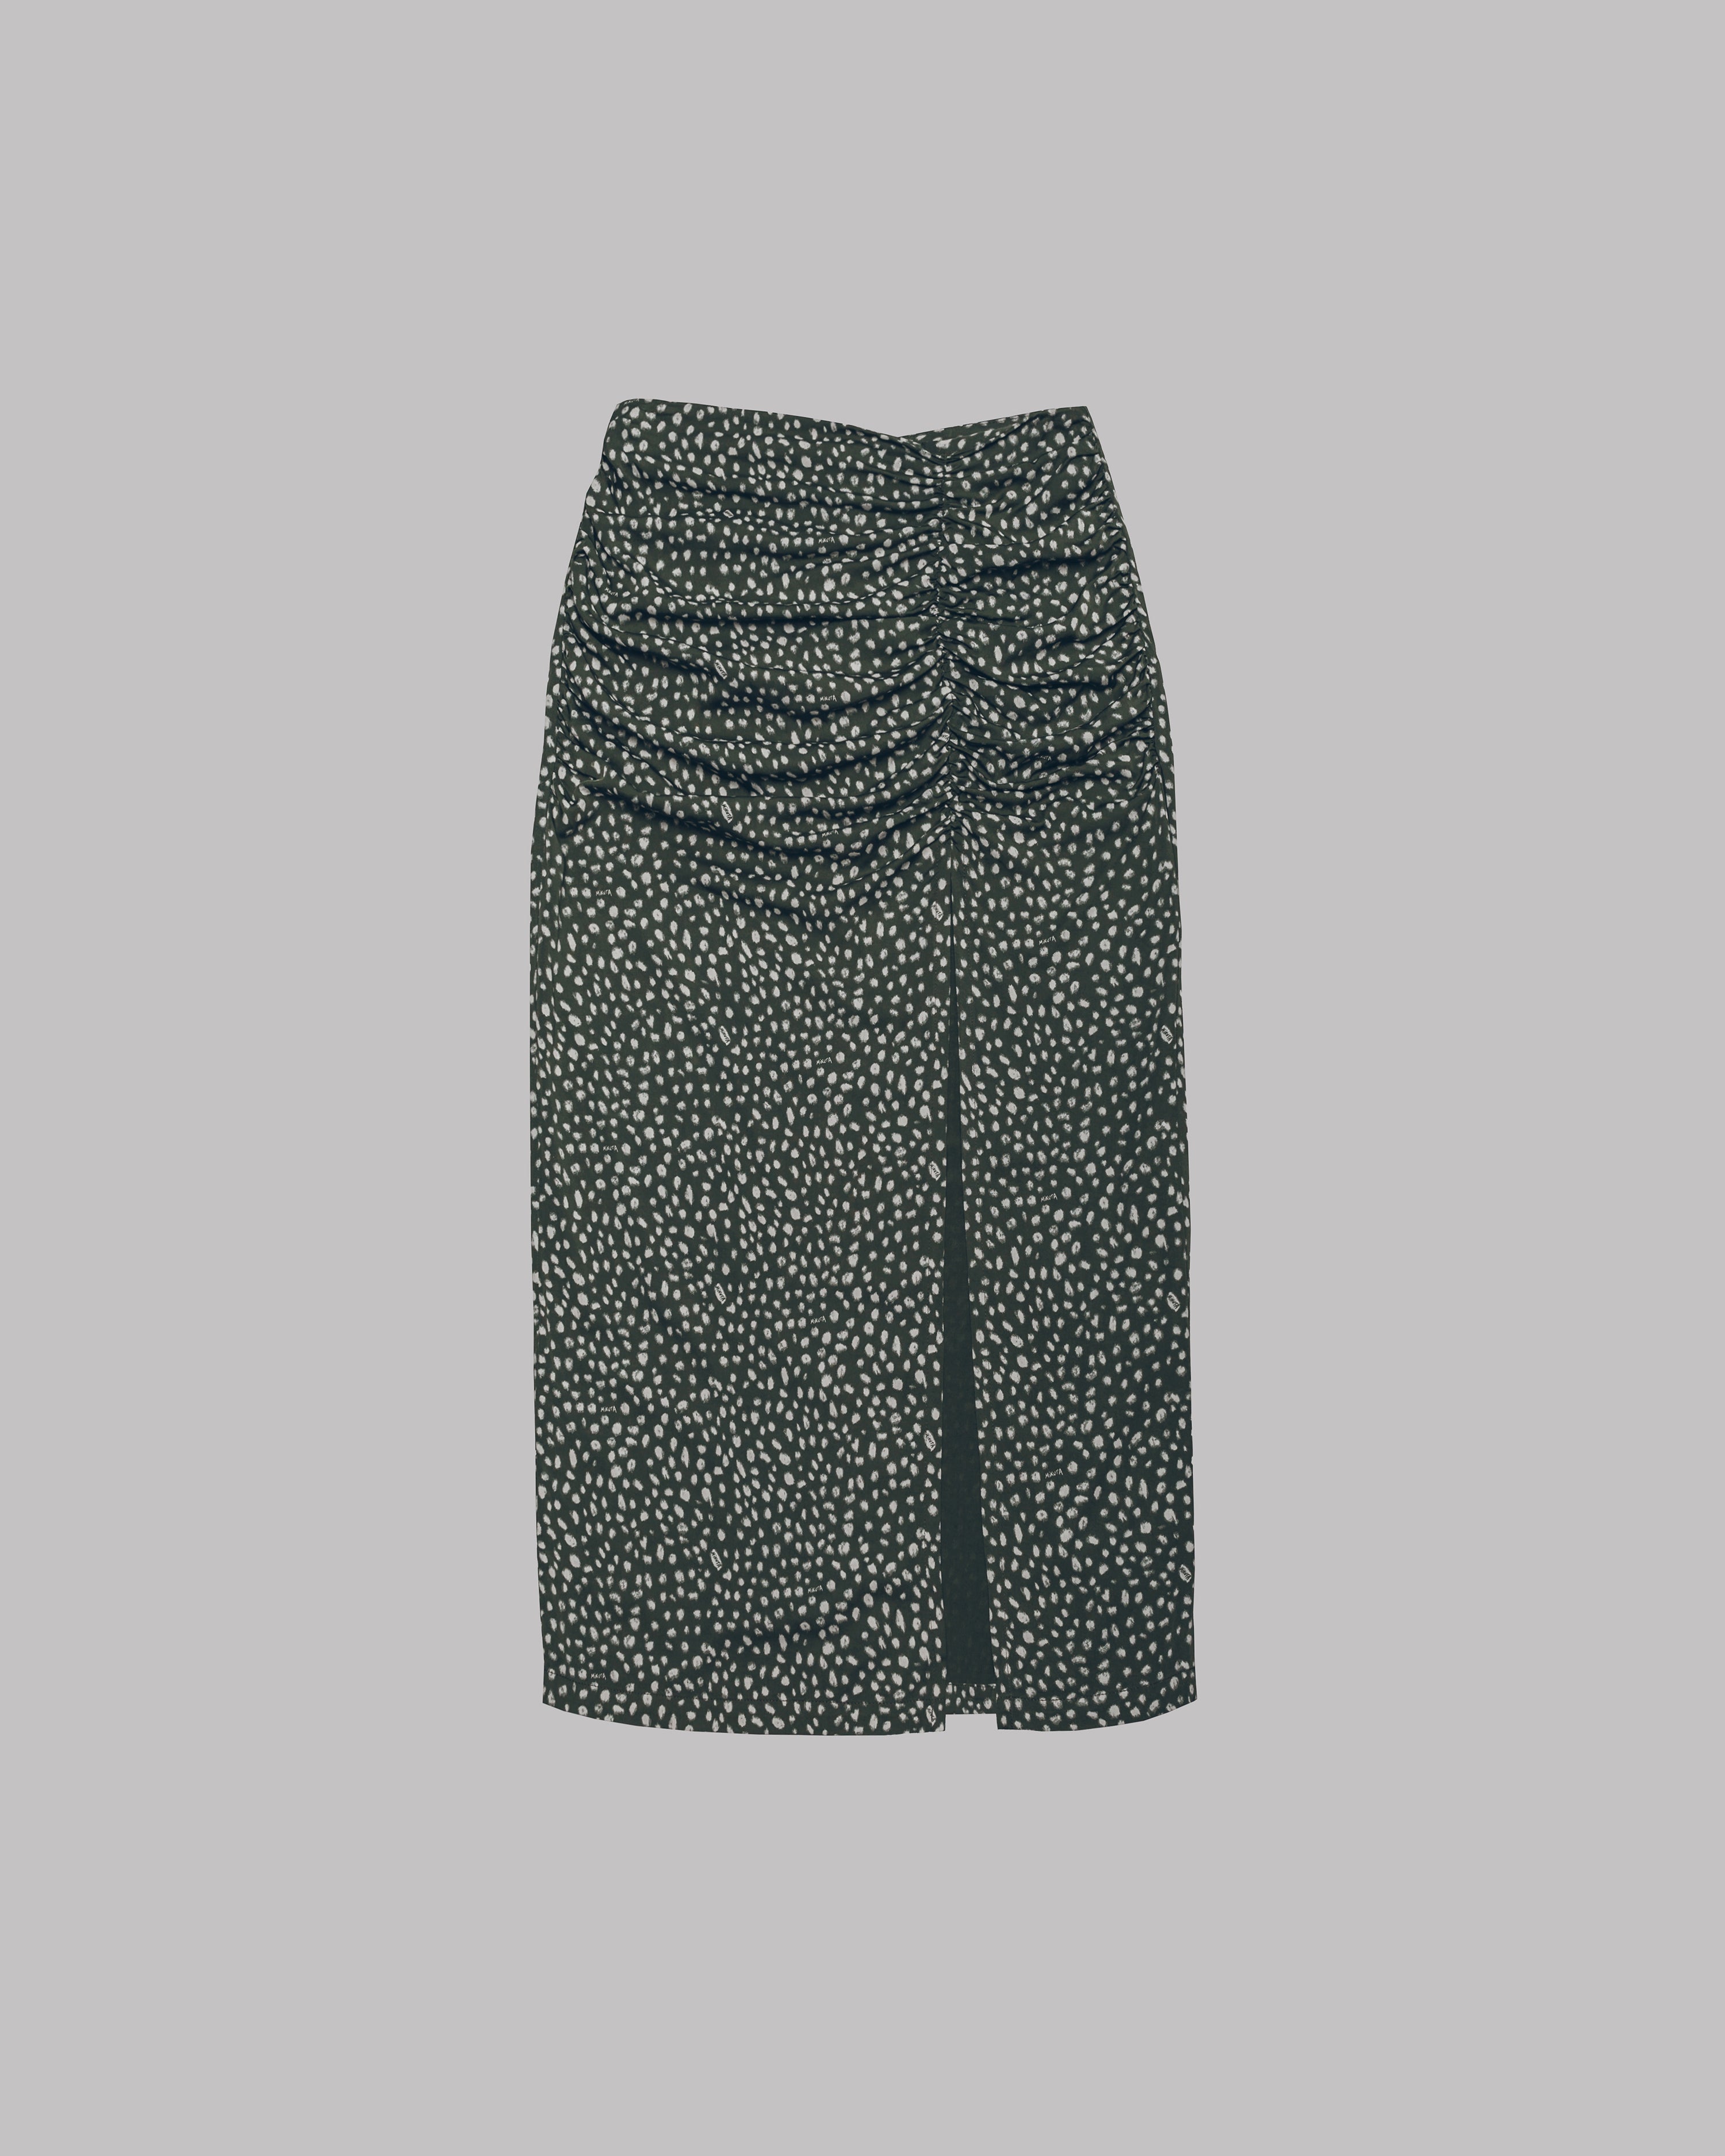 The Green Dotted Long Slit Skirt